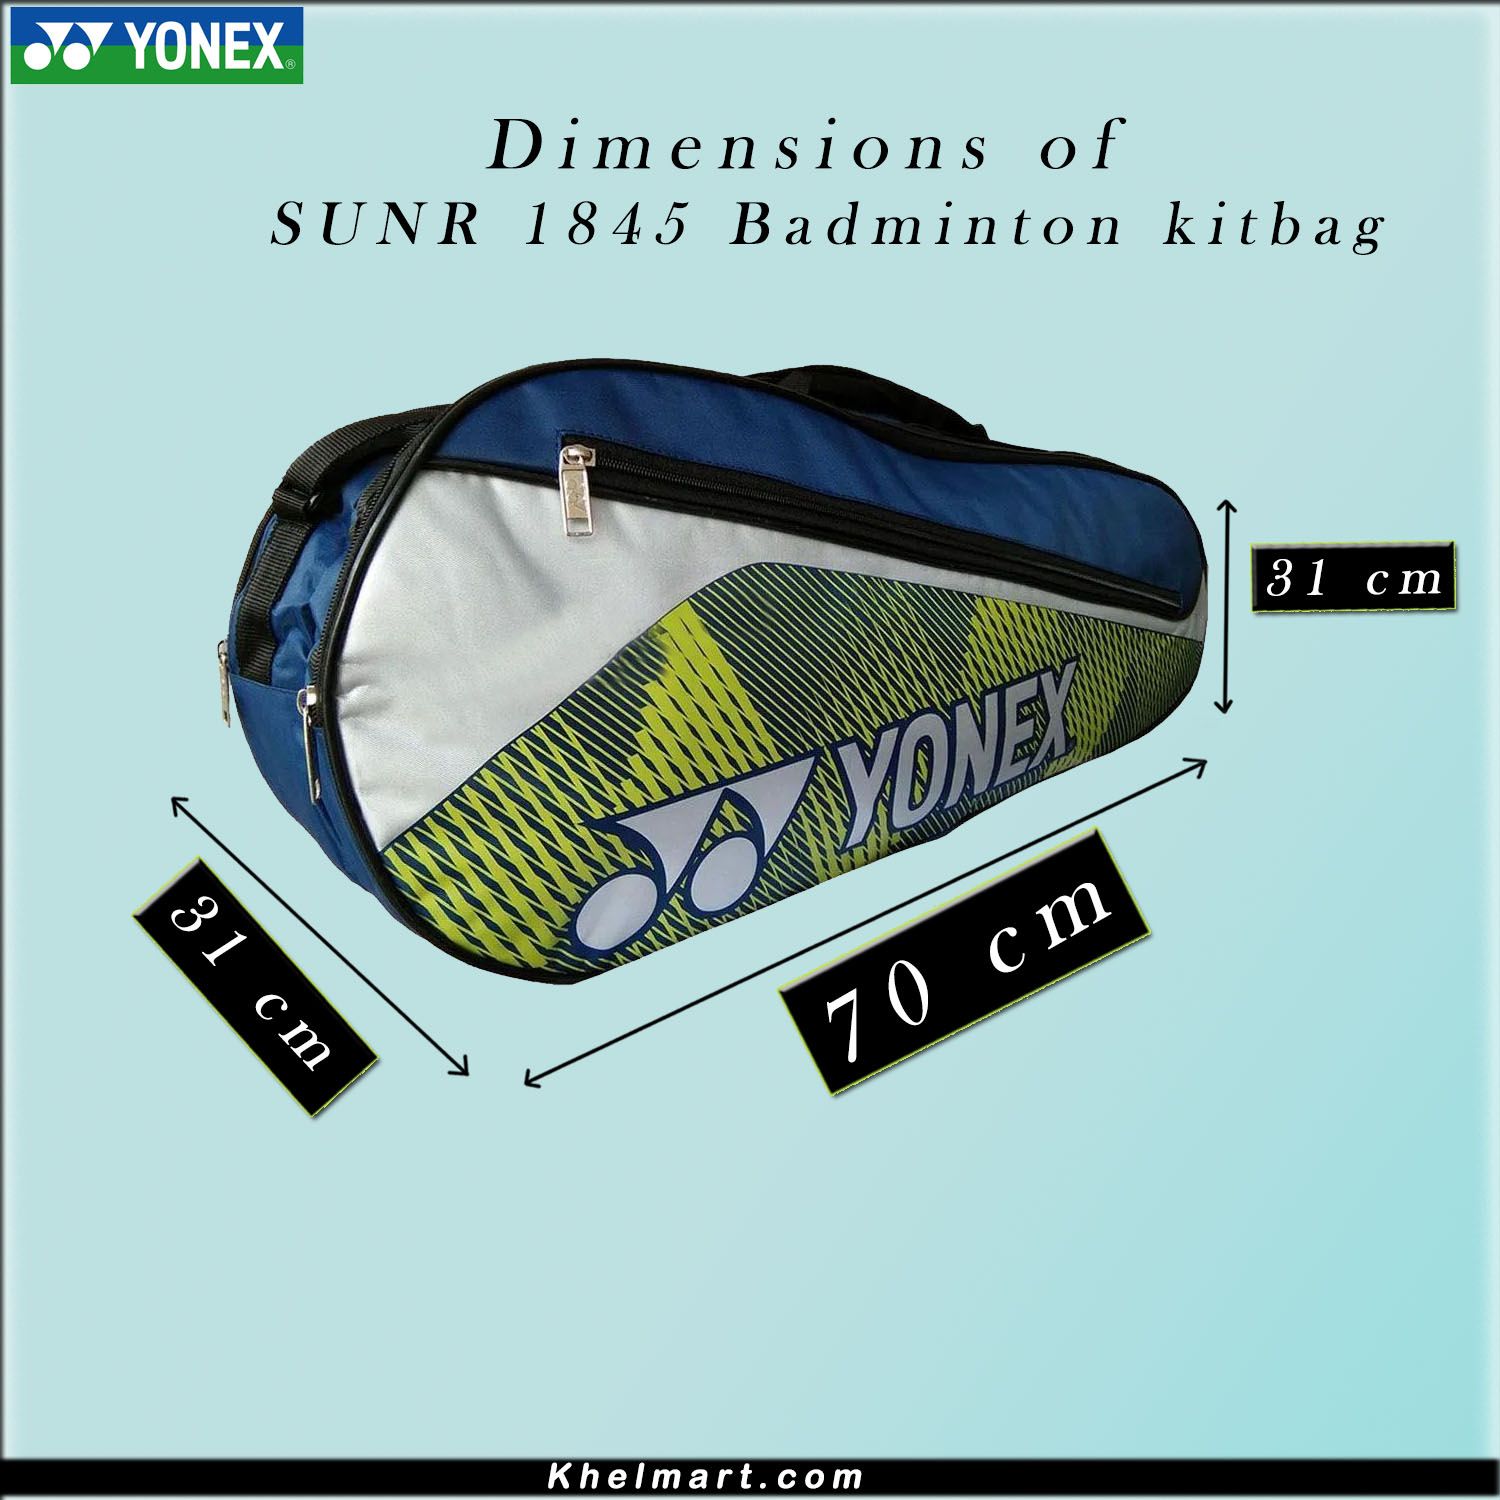 YONEX SUNR 1845 Thermal Badminton Kit Bag Navy and Lime